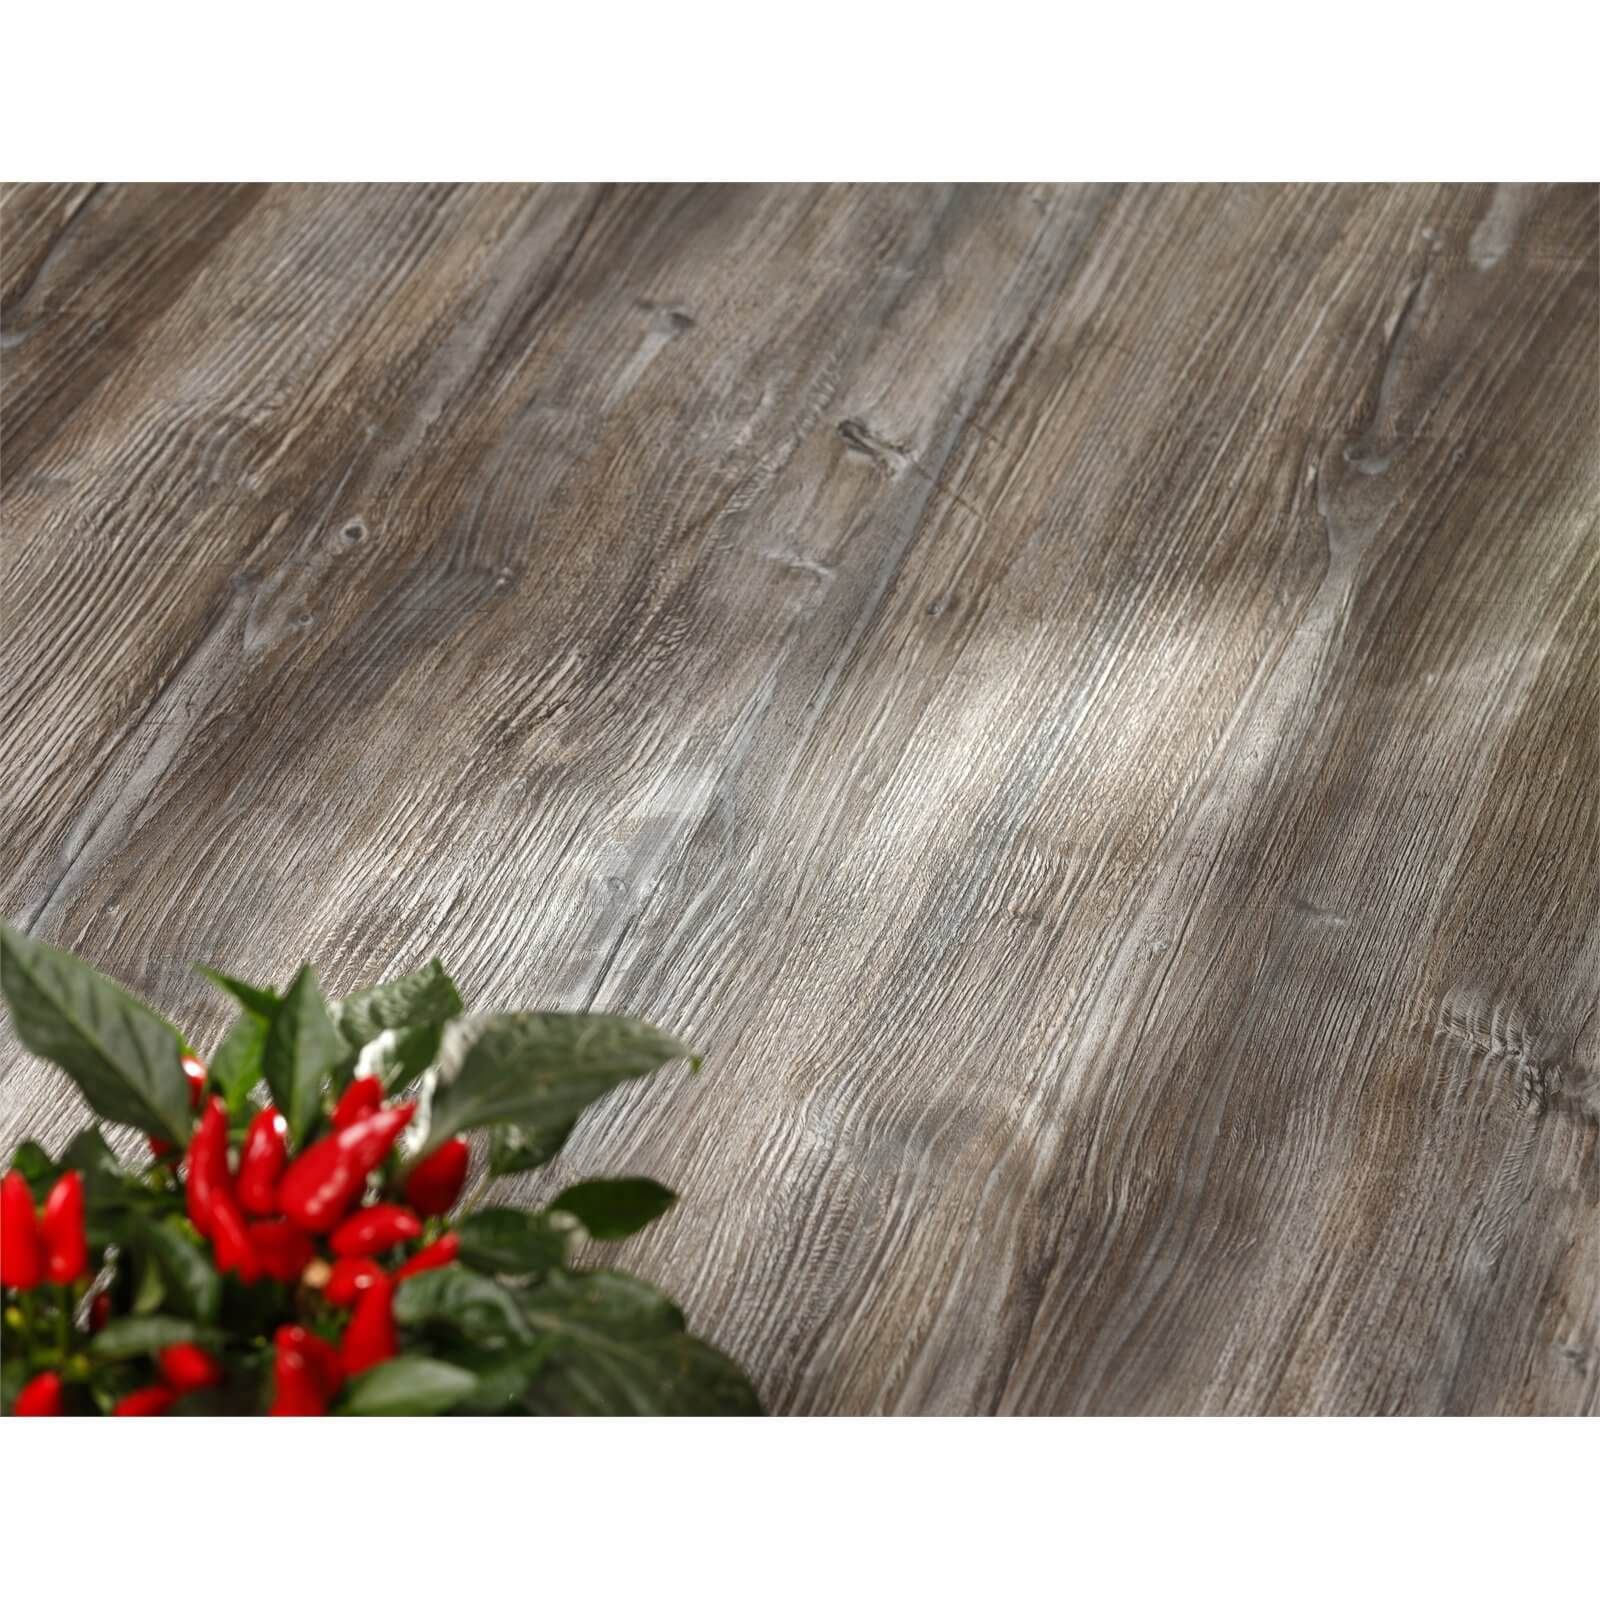 Pine Grain Kitchen Worktop - Profile Edge - 300 x 60 x 3.8cm